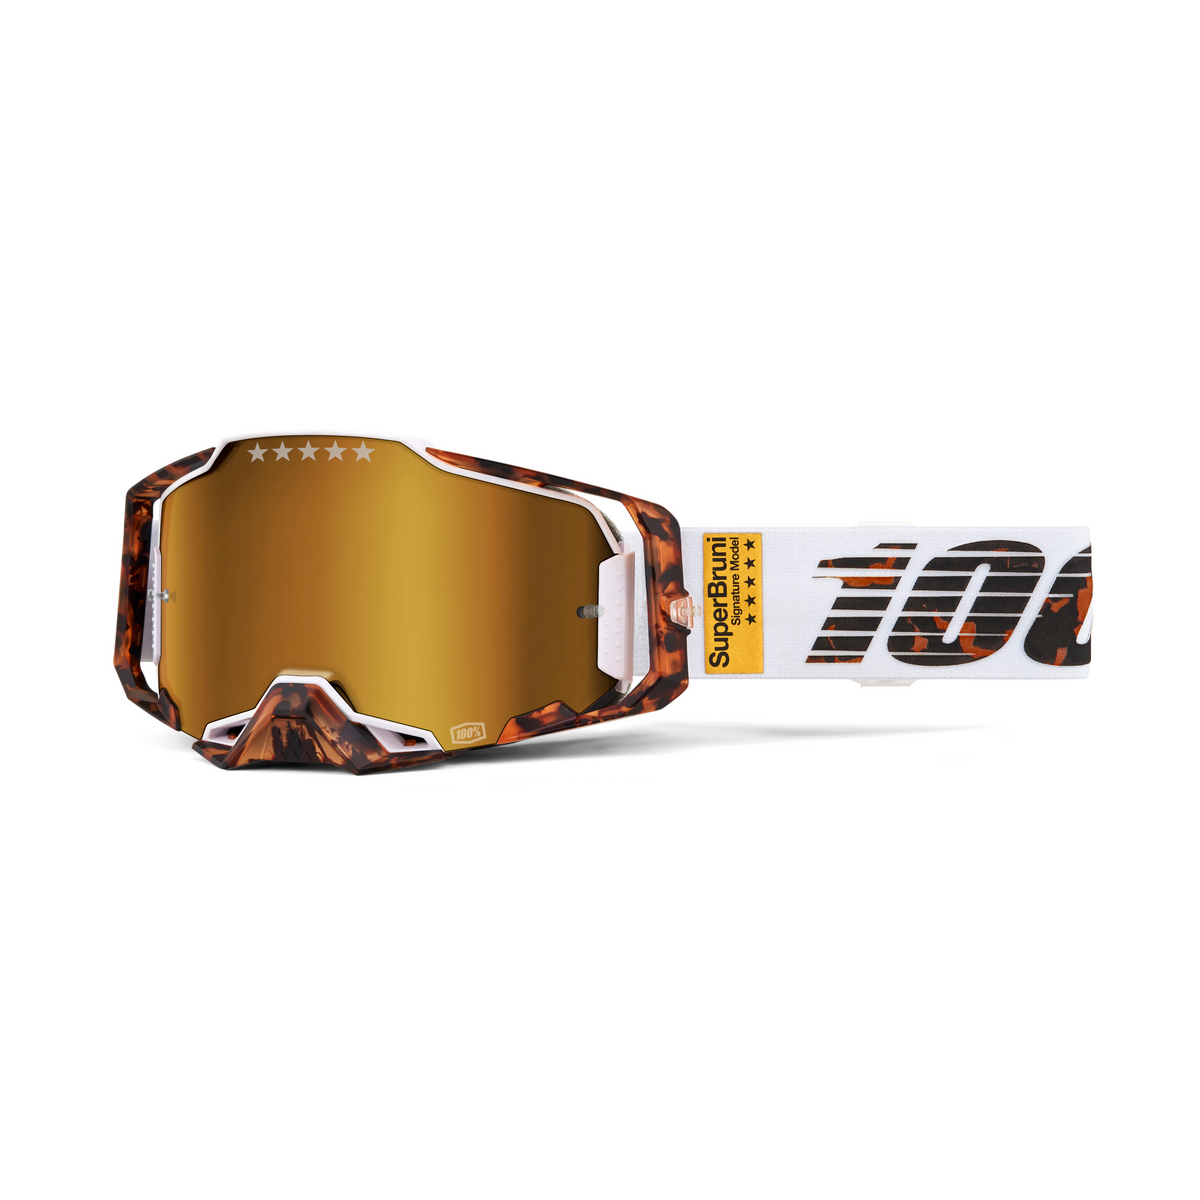 100 Percent Armega Goggles - One Size Fits Most - LE Bruni Special - Mirror True Gold Lens